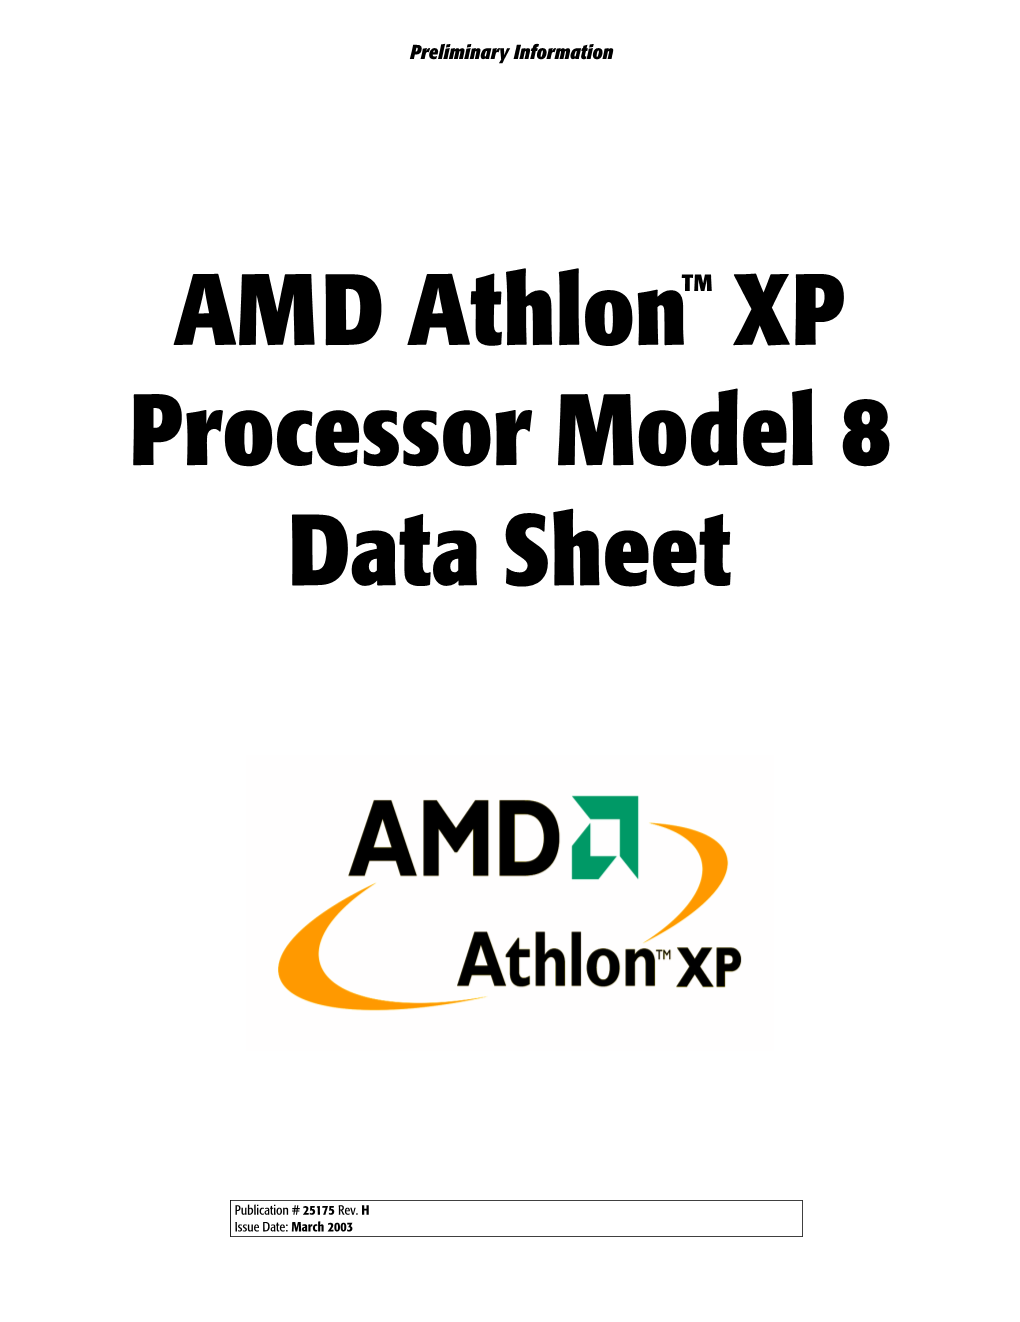 AMD Athlon XP Processor Model 8 Data Sheet